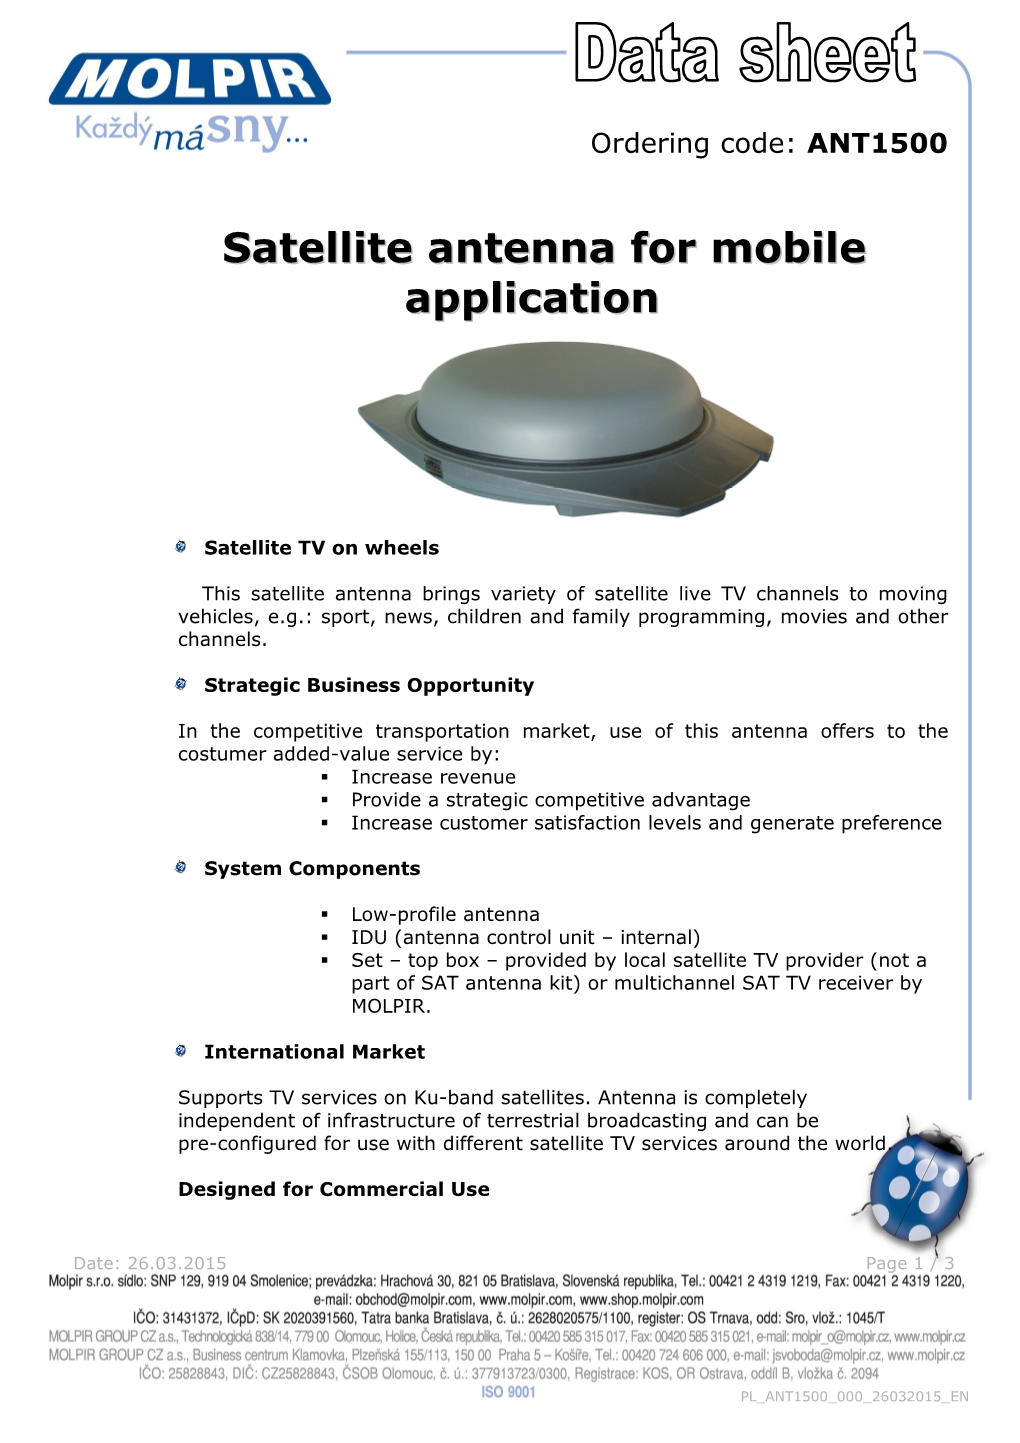 Satellite Antenna for Mobile Application